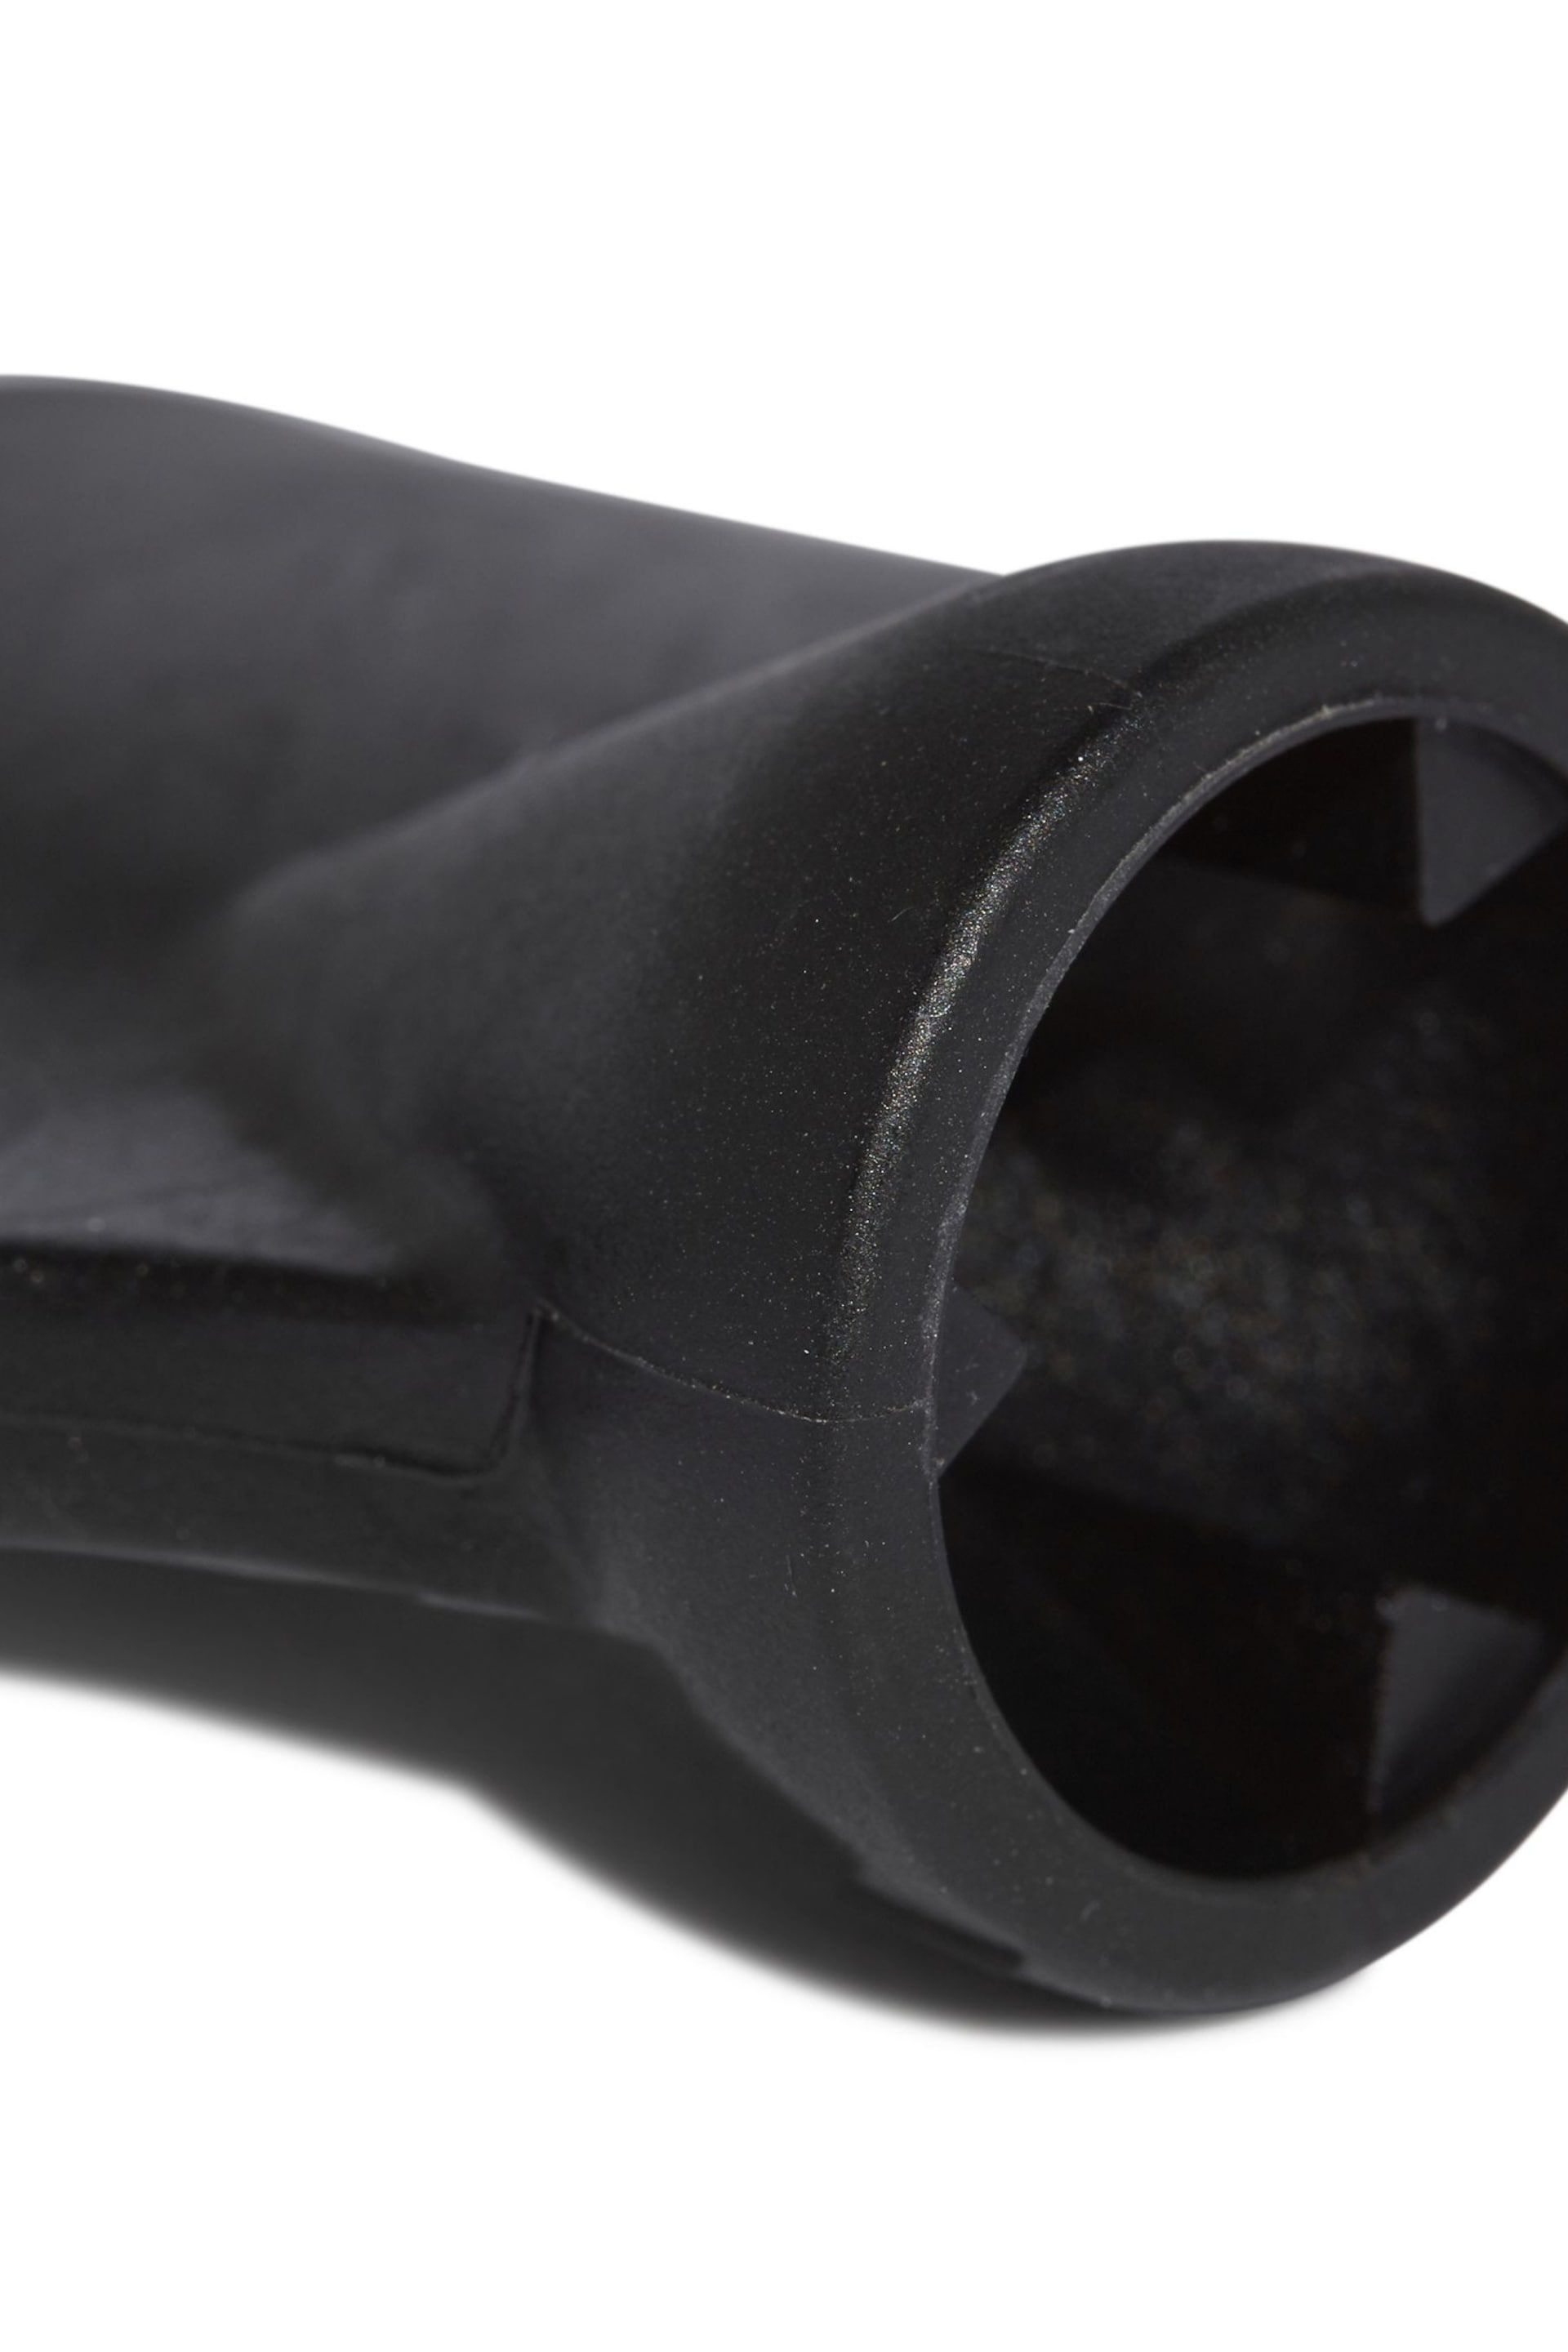 adidas Black Performance Stud Wrench - Image 3 of 3